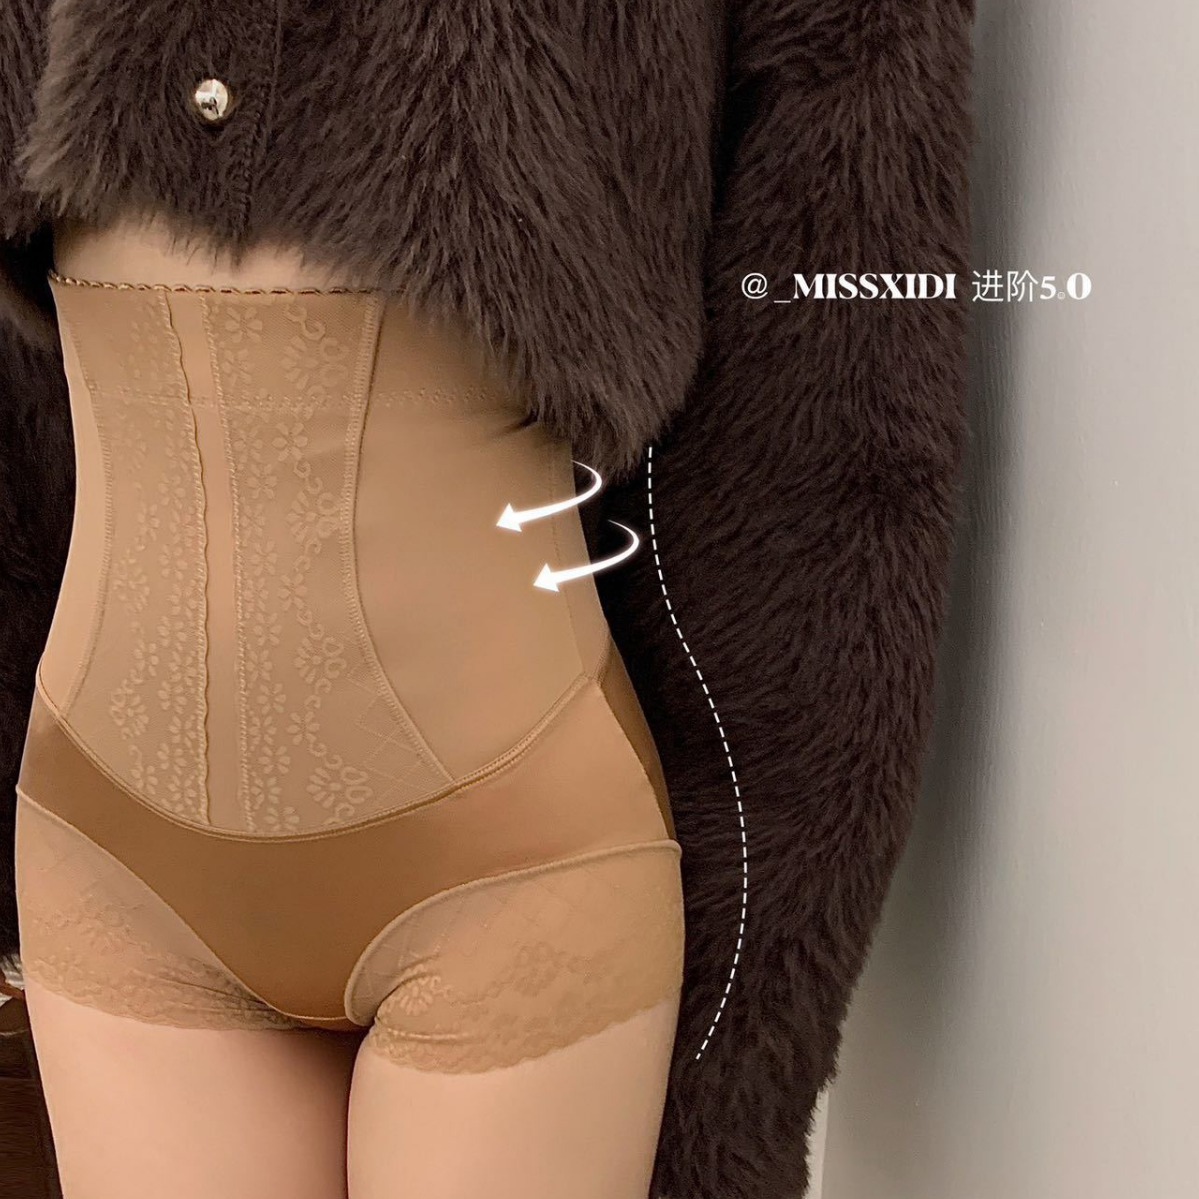 MISS密思829光质子热能收腹裤进阶5.0蕾丝高腰产后塑身美体女内裤